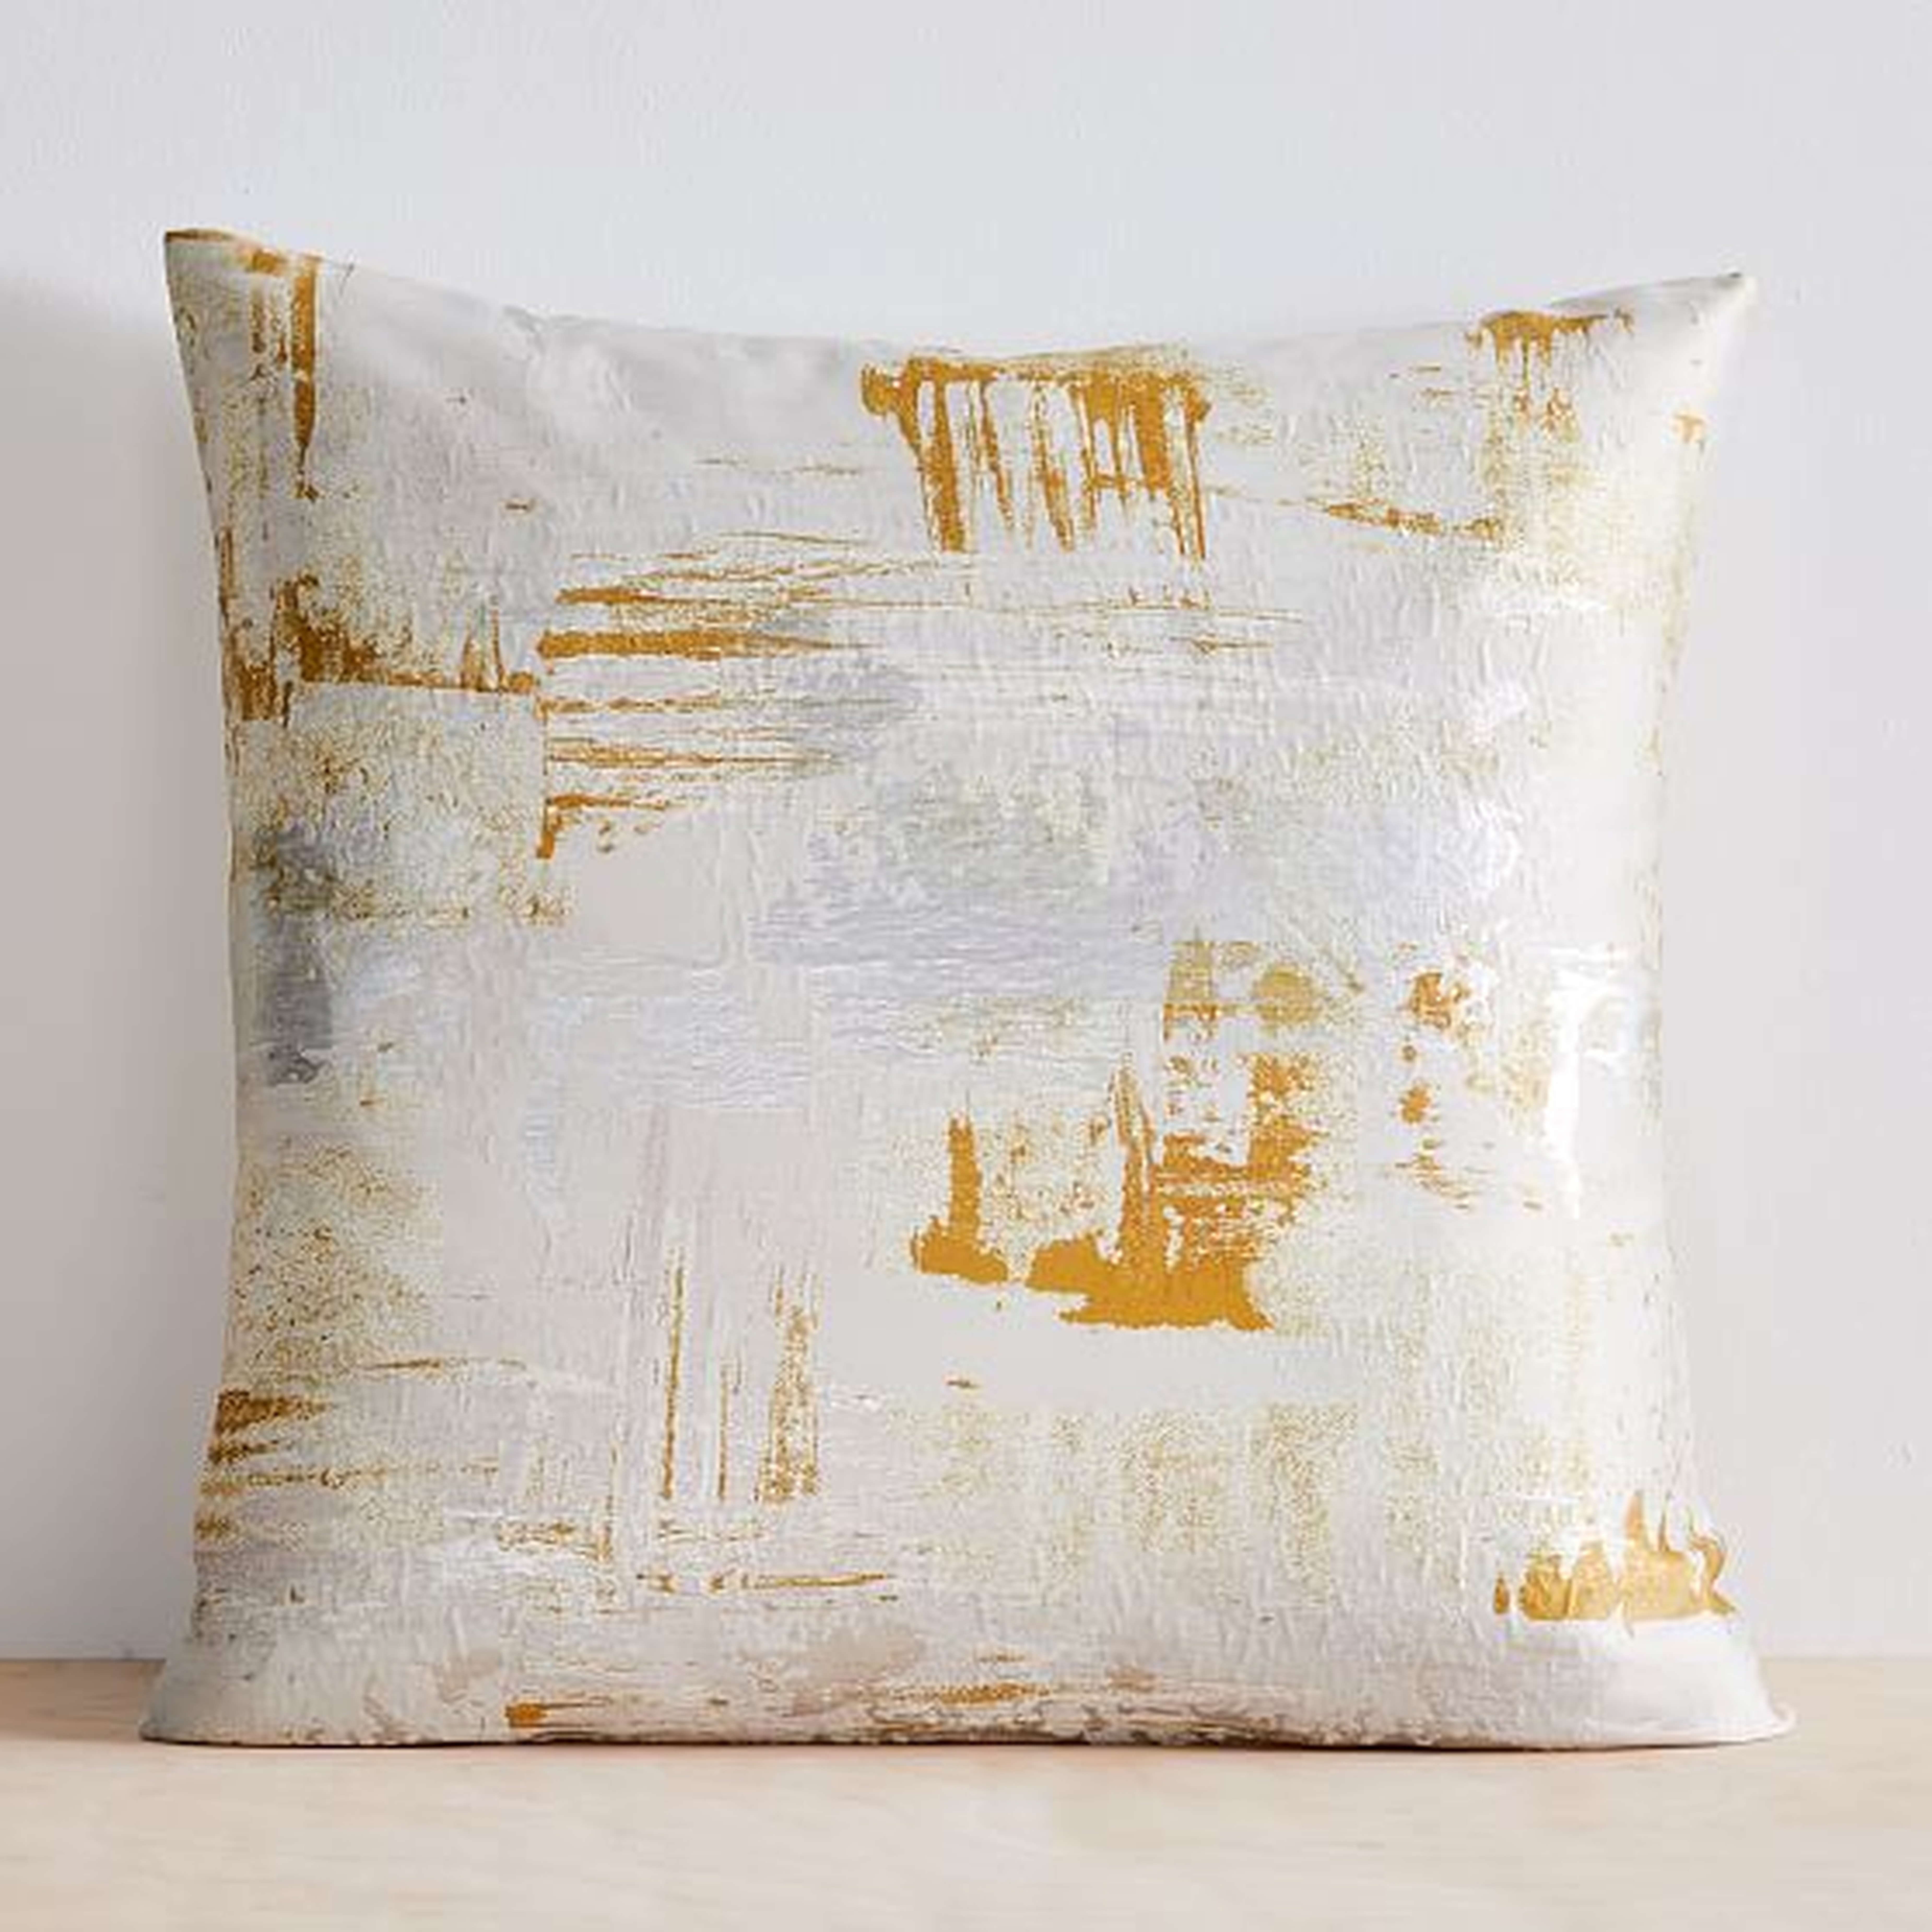 Painterly Brocade Pillow Cover, 24"x24", Dark Horseradish - West Elm